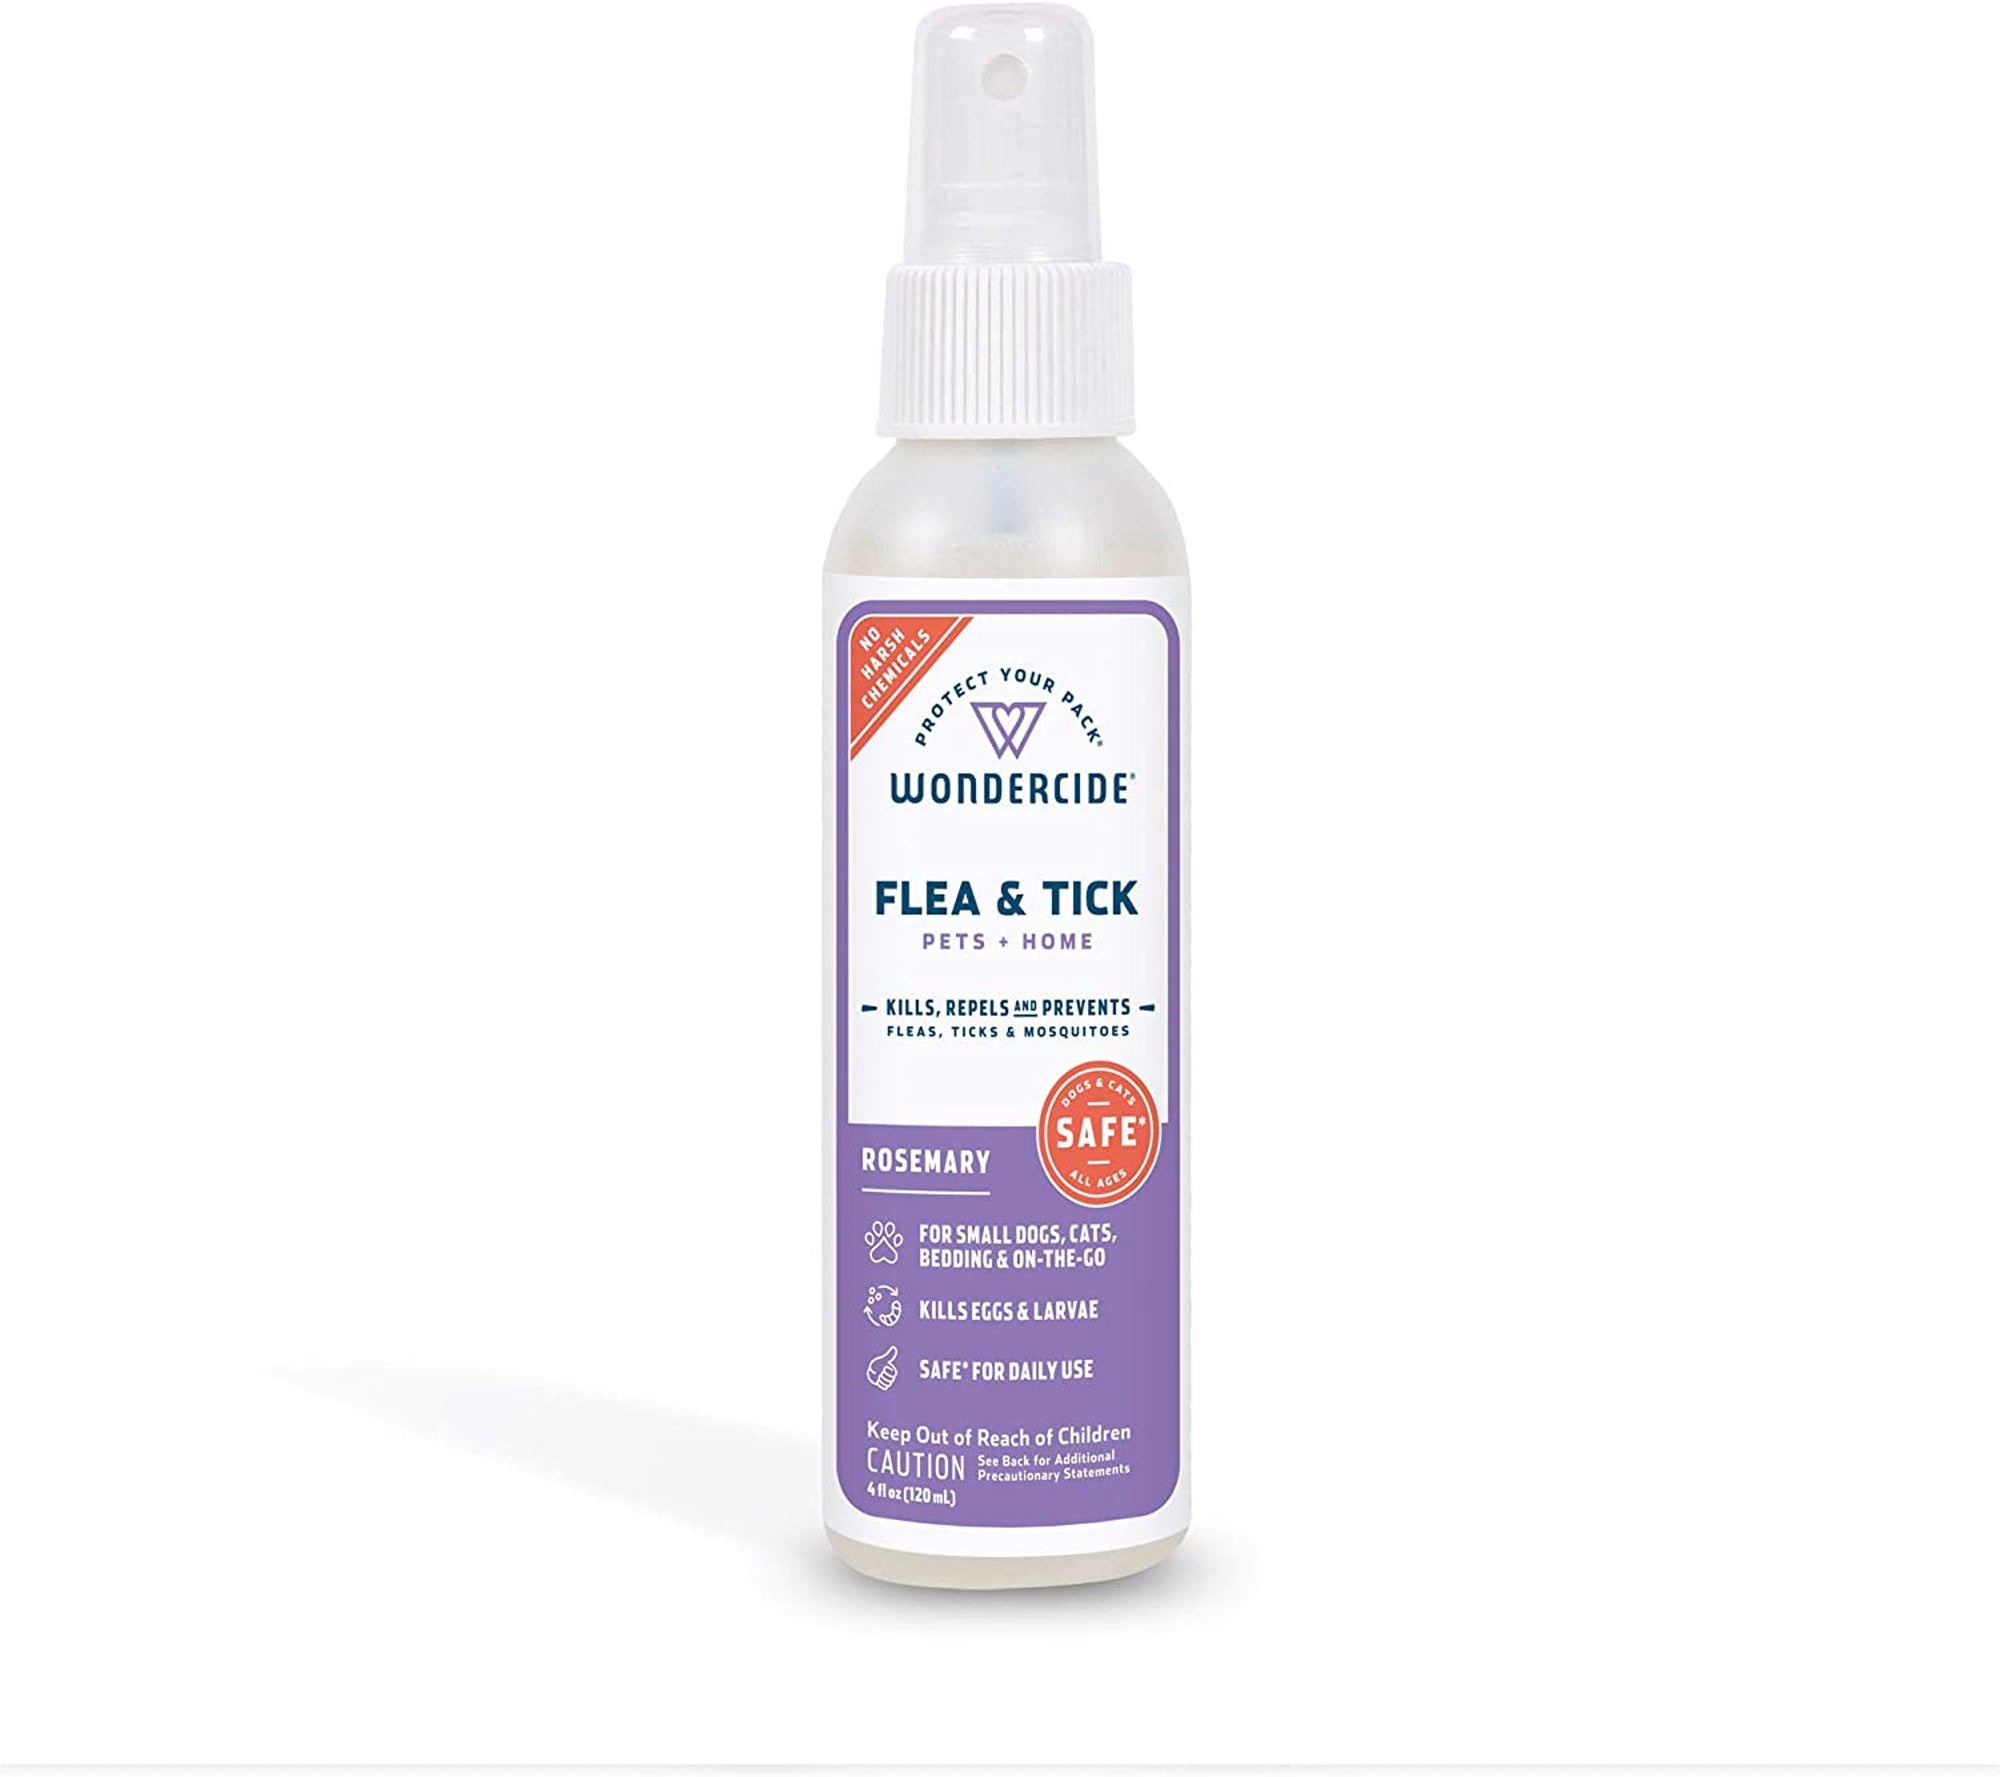 Wondercide Flea Tick And Mosquito Control Spray 4 oz.-Rosemary